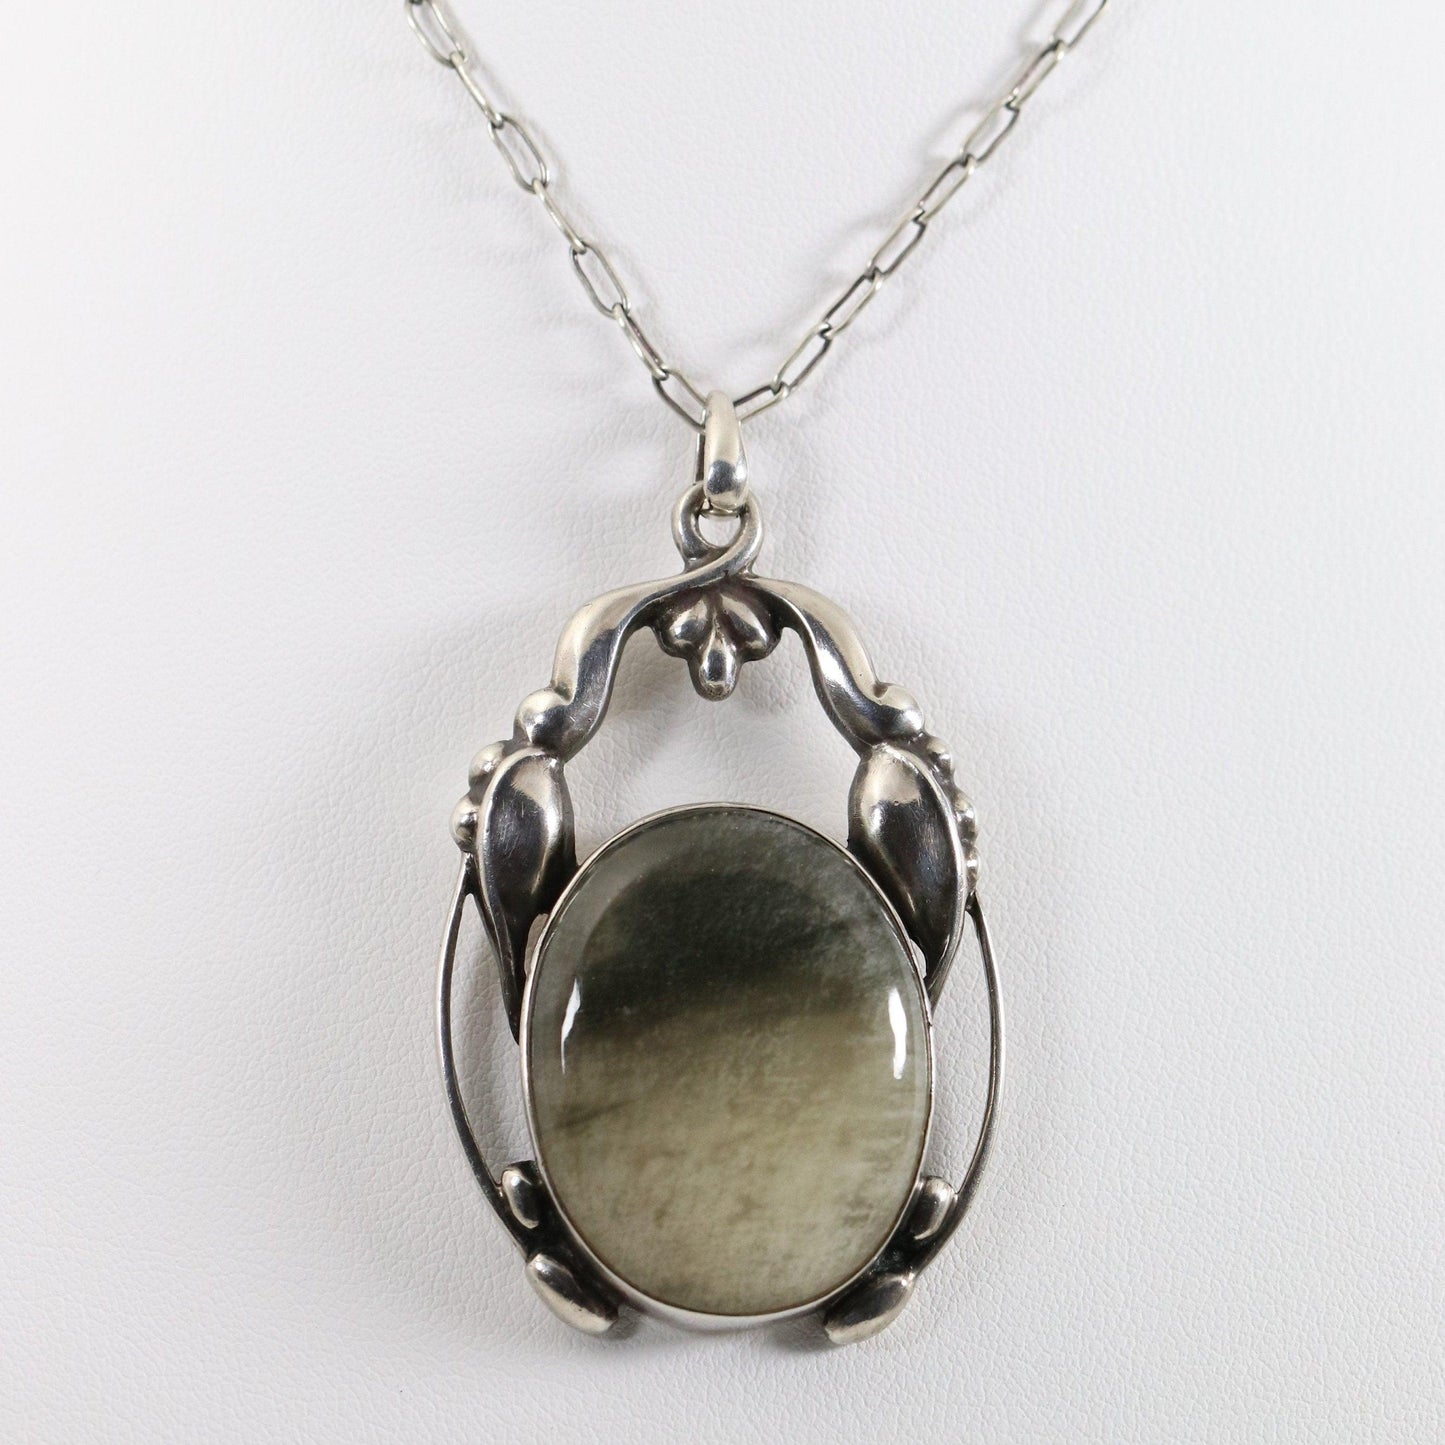 Georg Jensen Jewelry | Quartz Art Nouveau Silver Vintage Necklace Pendant 49 - Carmel Fine Silver Jewelry